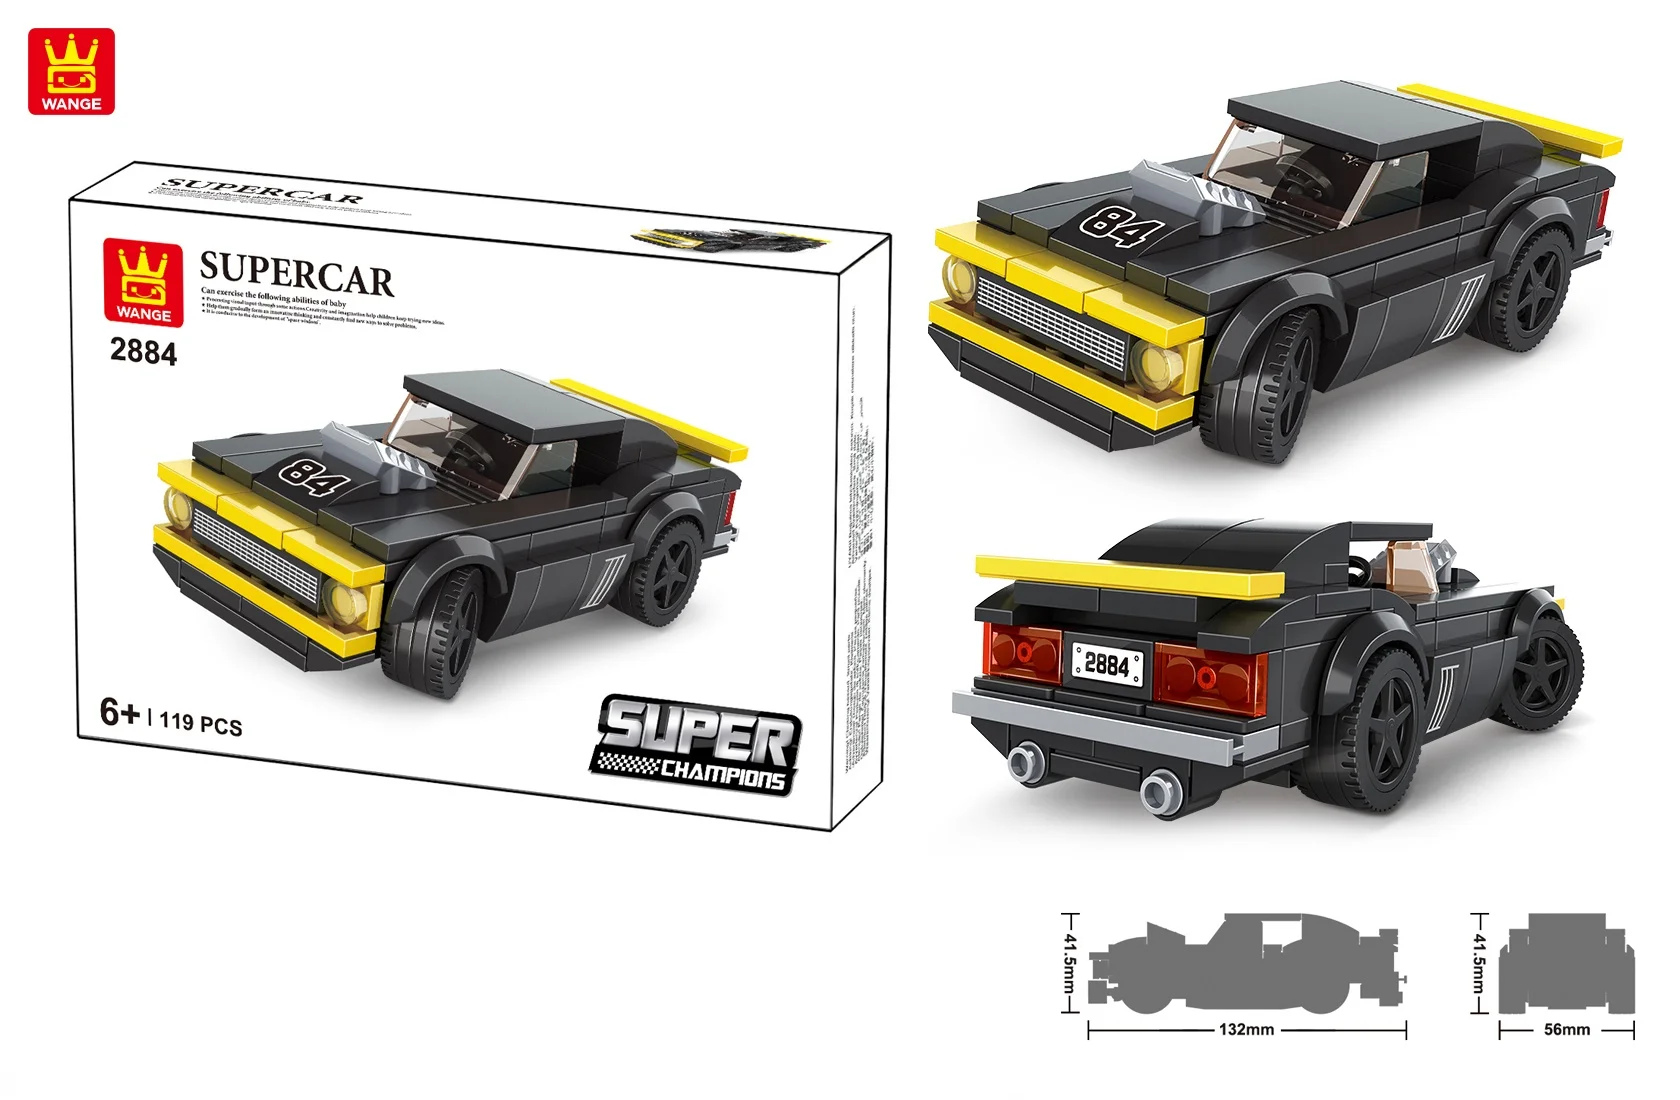 Supercar fekete/sárga sportkocsi - 119 db-os